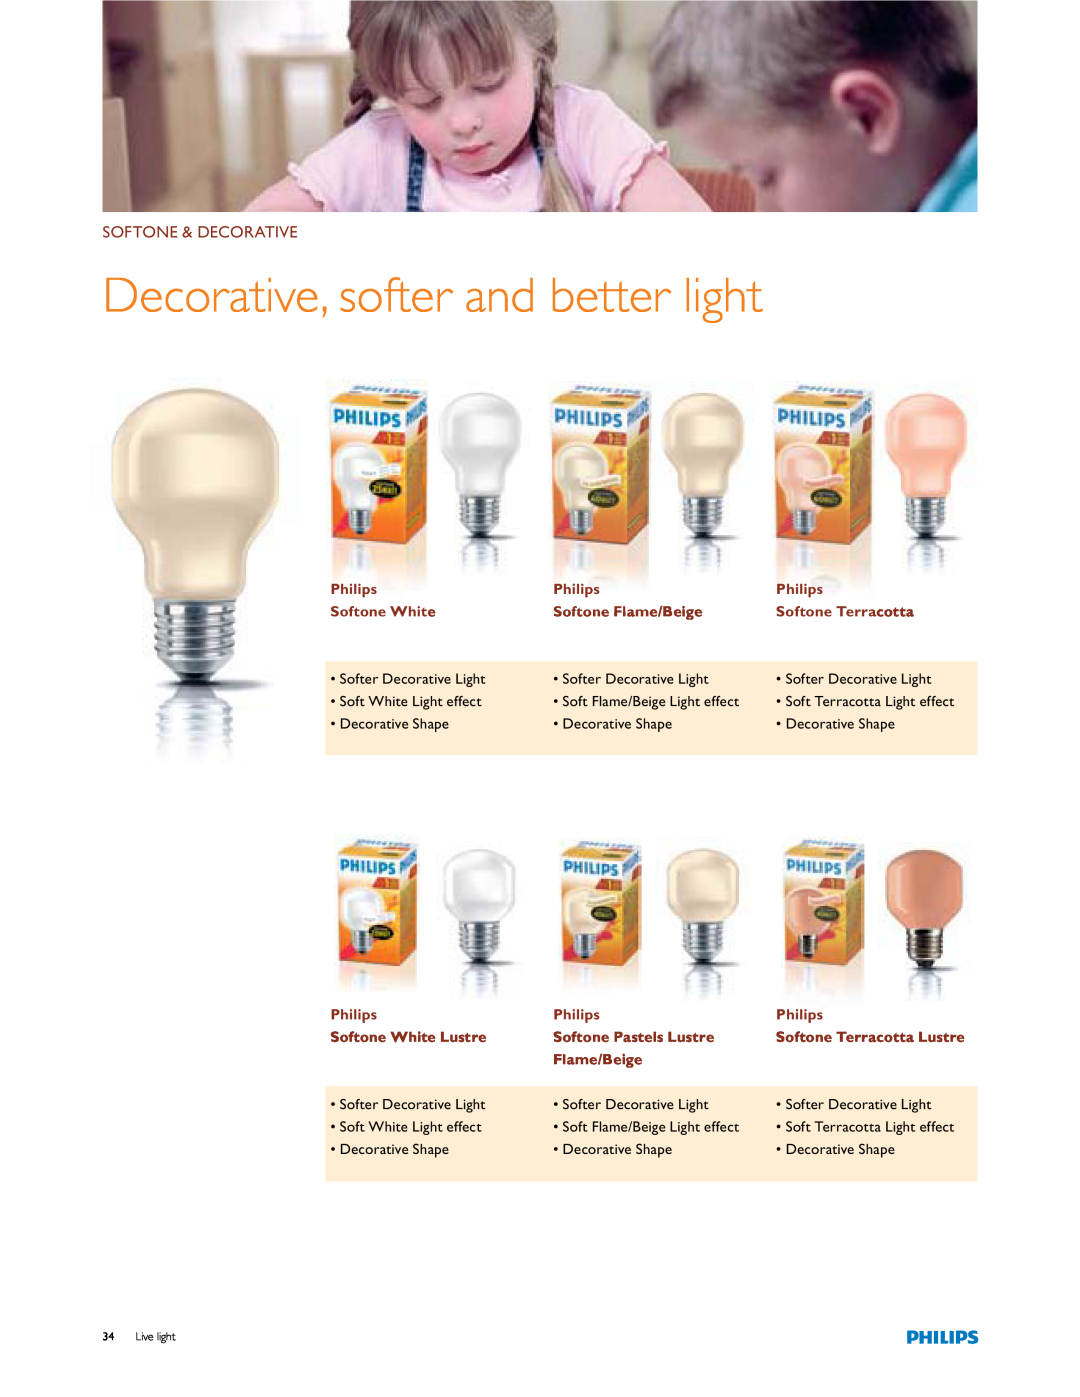 Philips Softer Decorative Light manual Decorative, softer and better light, Softone & Decorative 